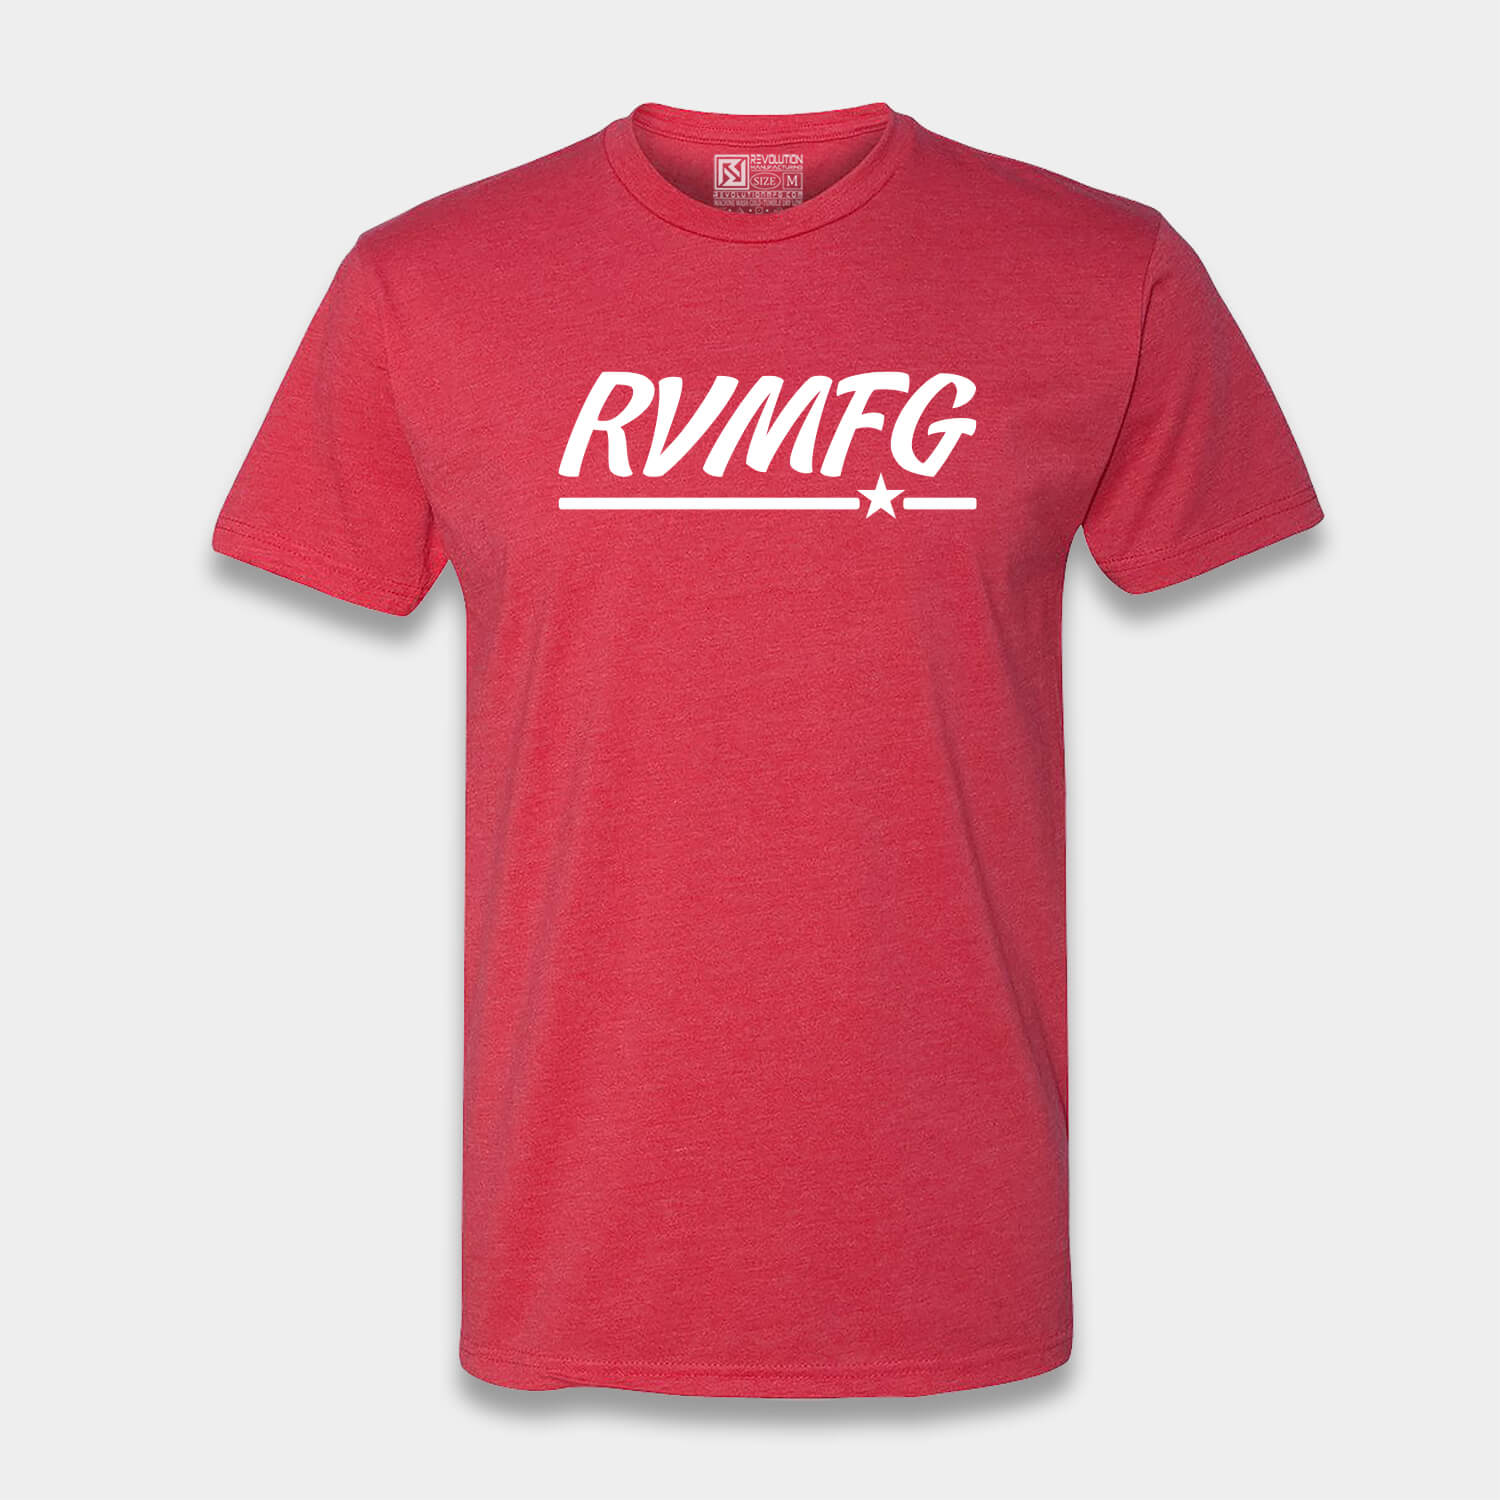 RVMFG Signature T-Shirt